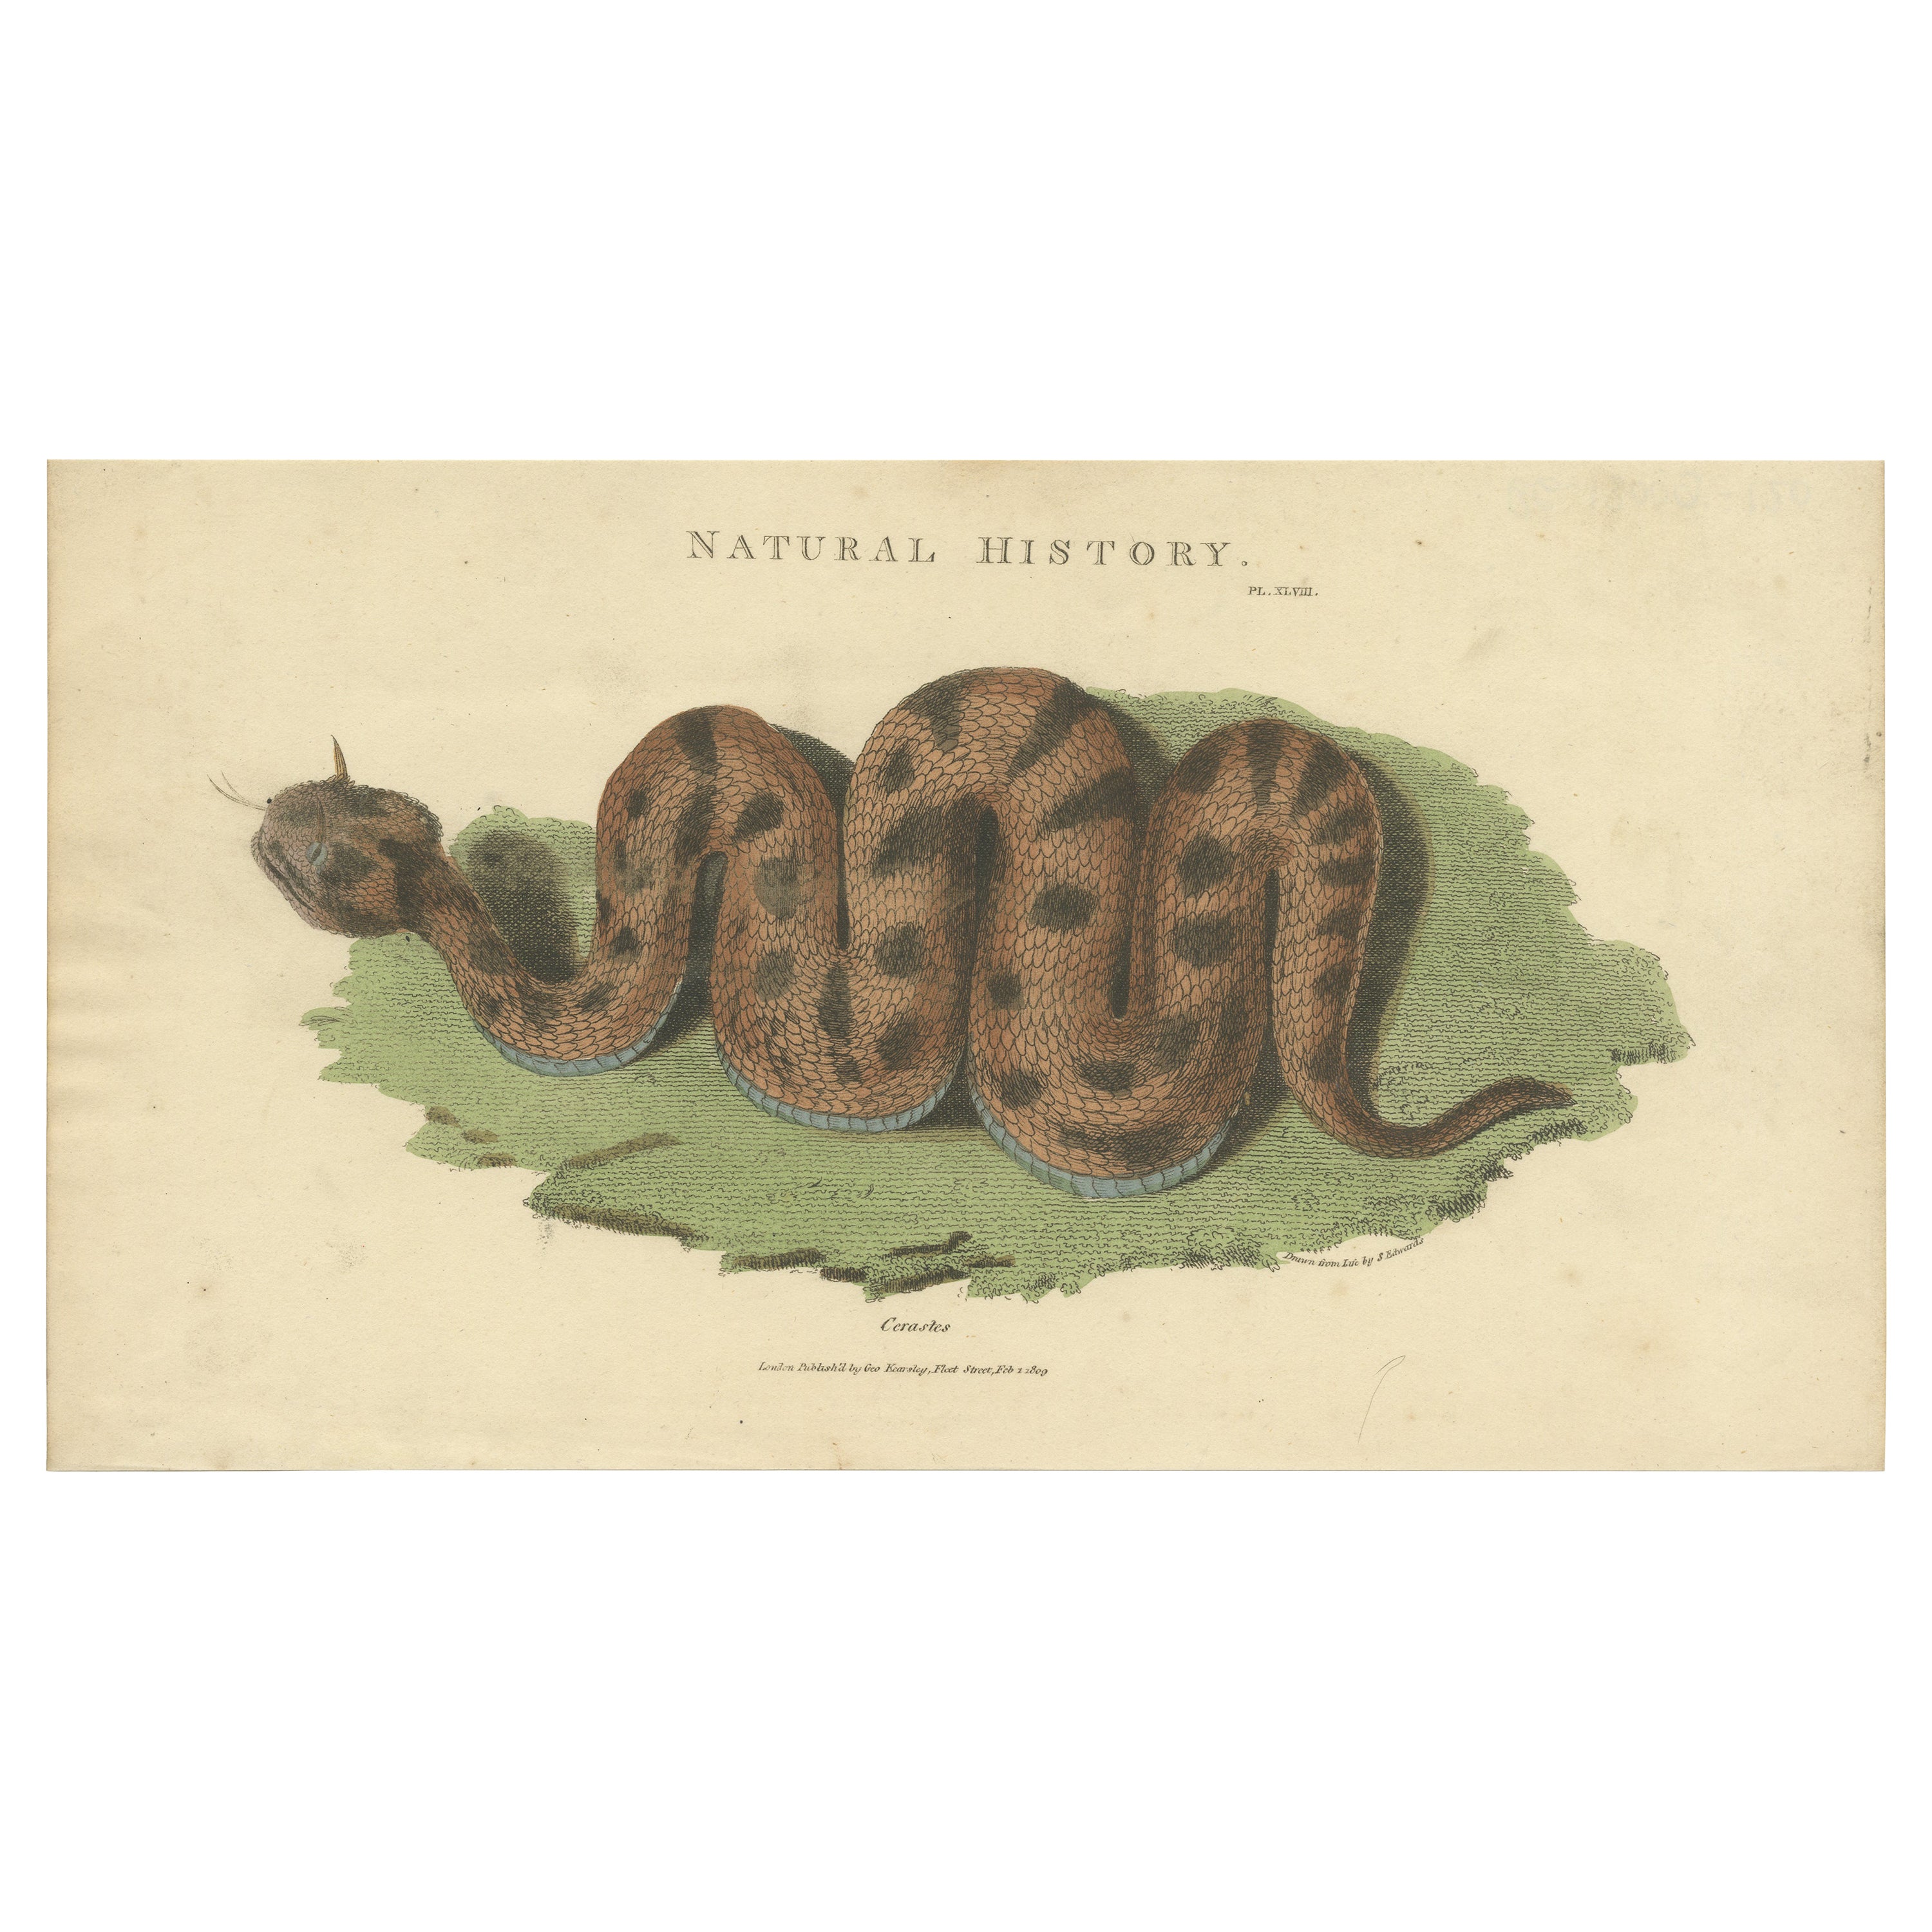 Antique Print of the Cerastes Cerastes Snake by Kearsley '1809' For Sale